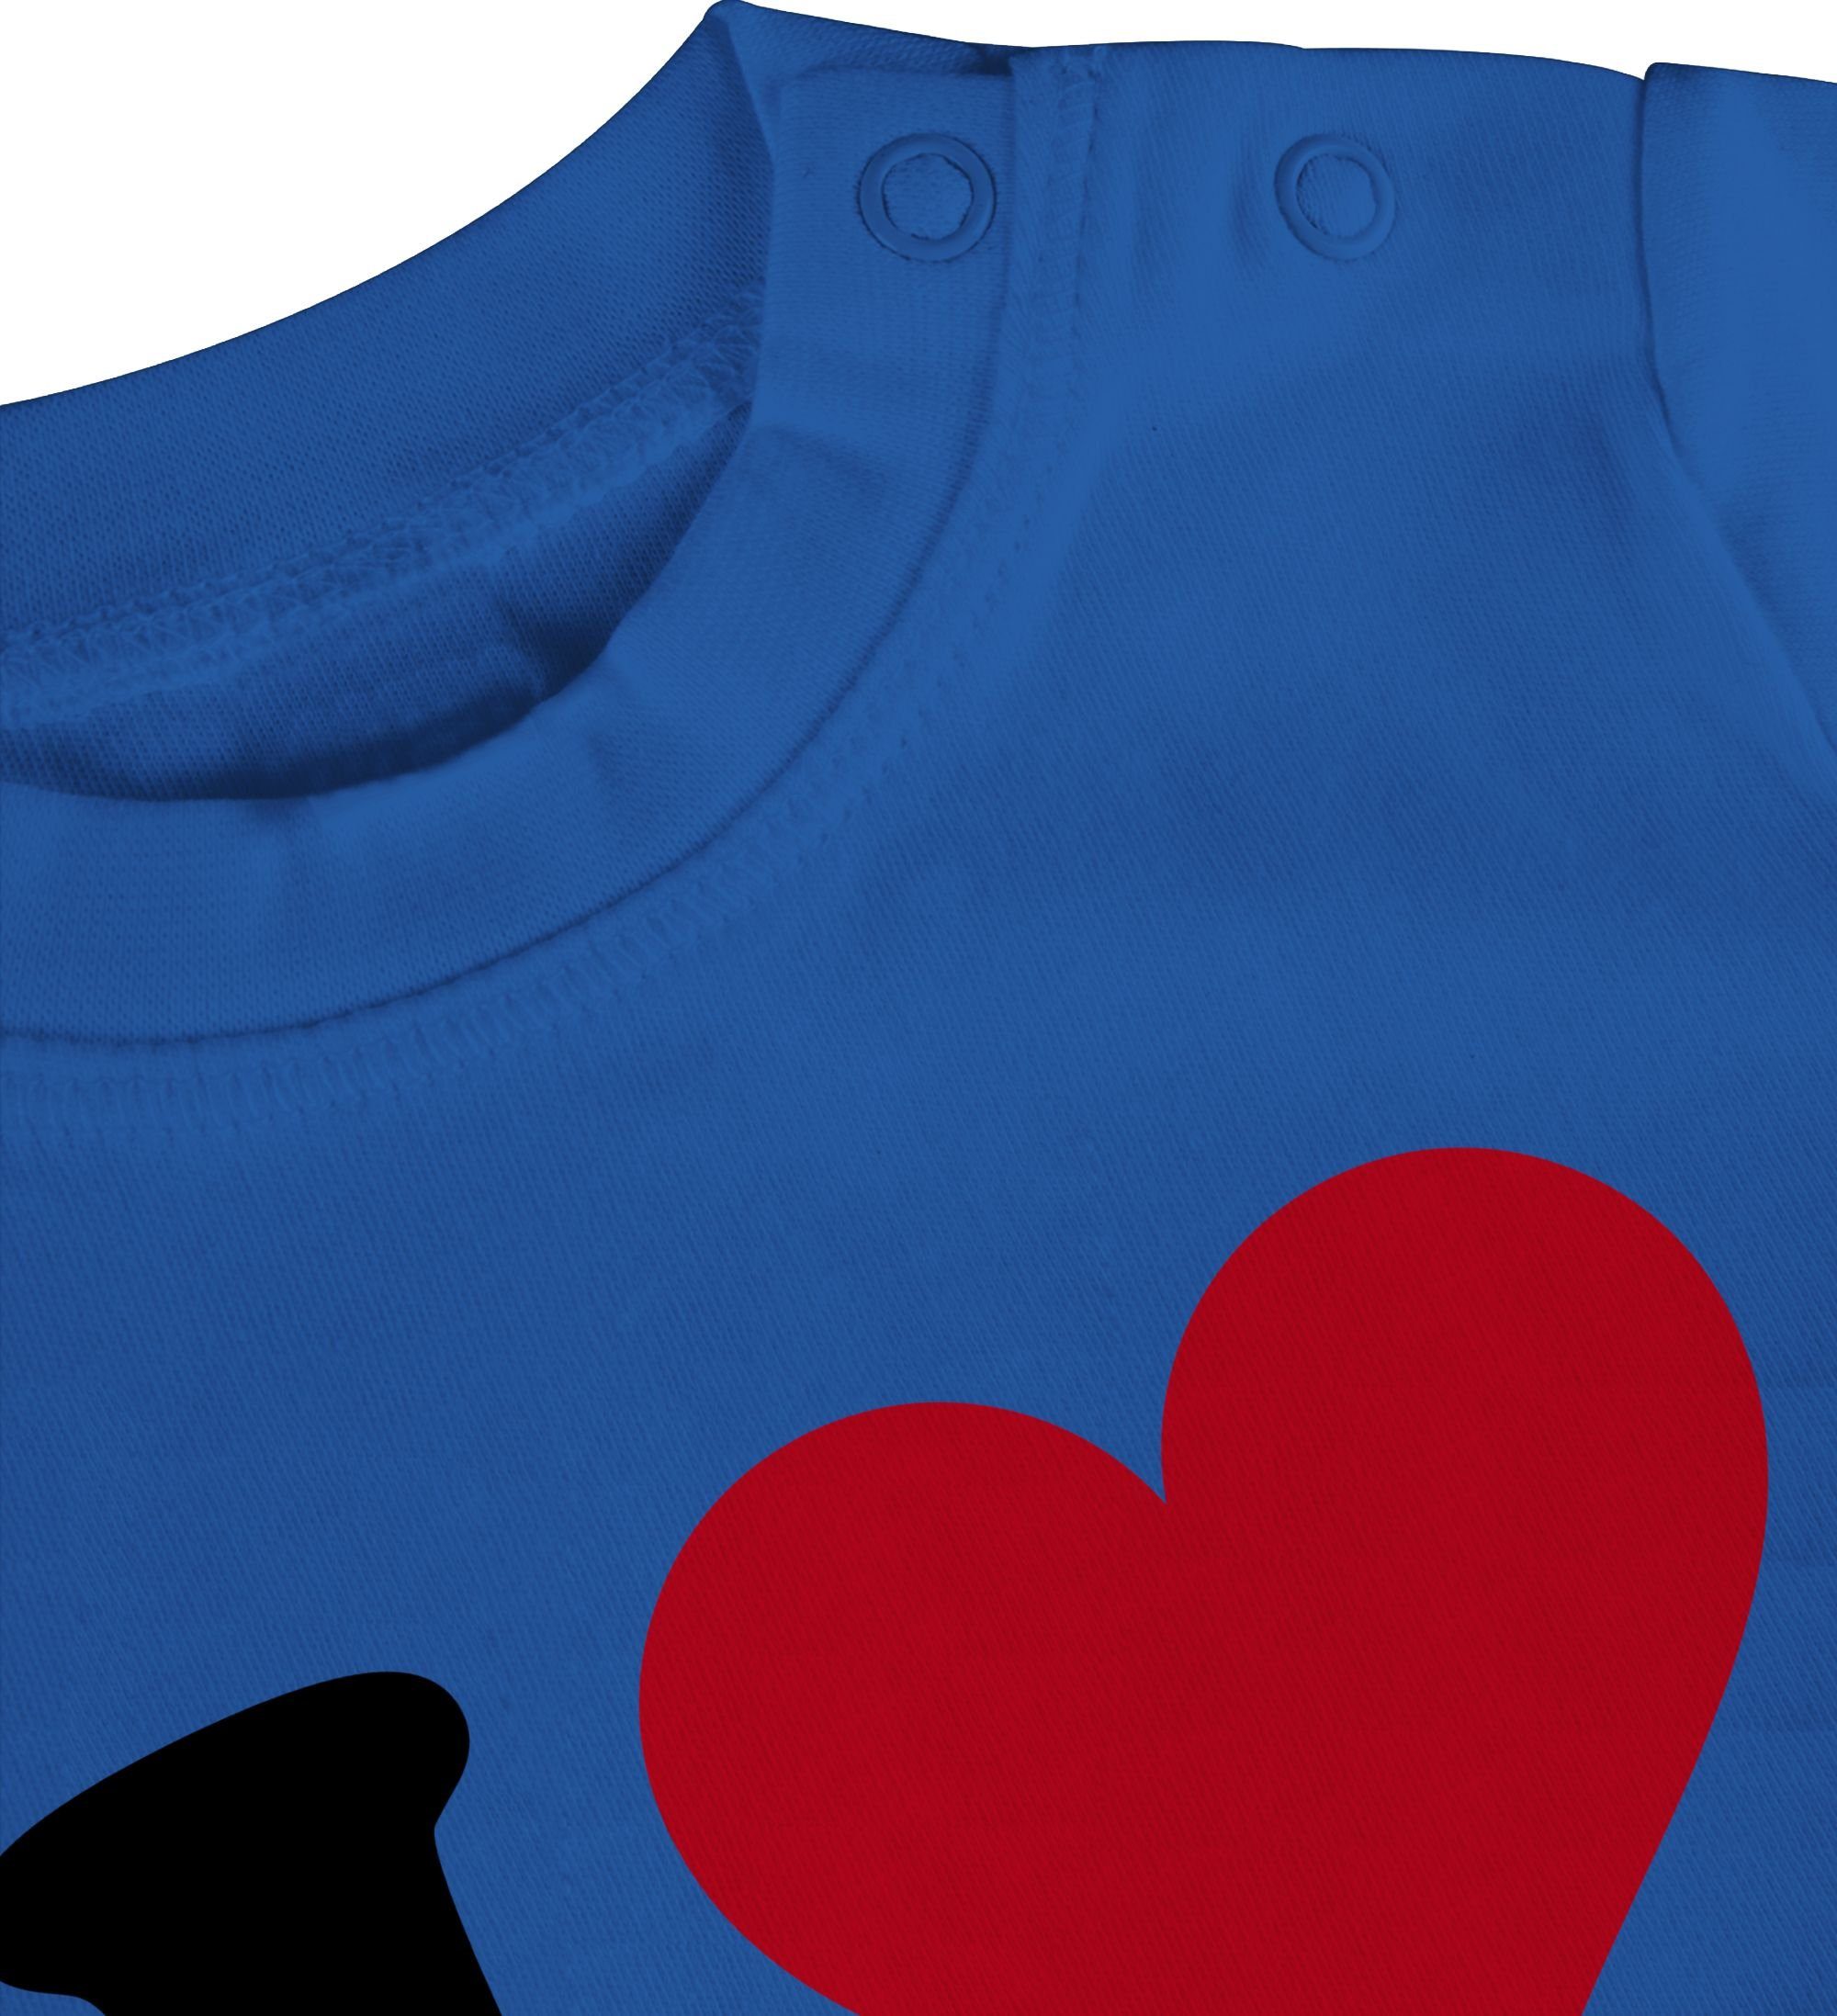 I Baby Love Geschenk T-Shirt 2 Vatertag Royalblau Shirtracer Papa